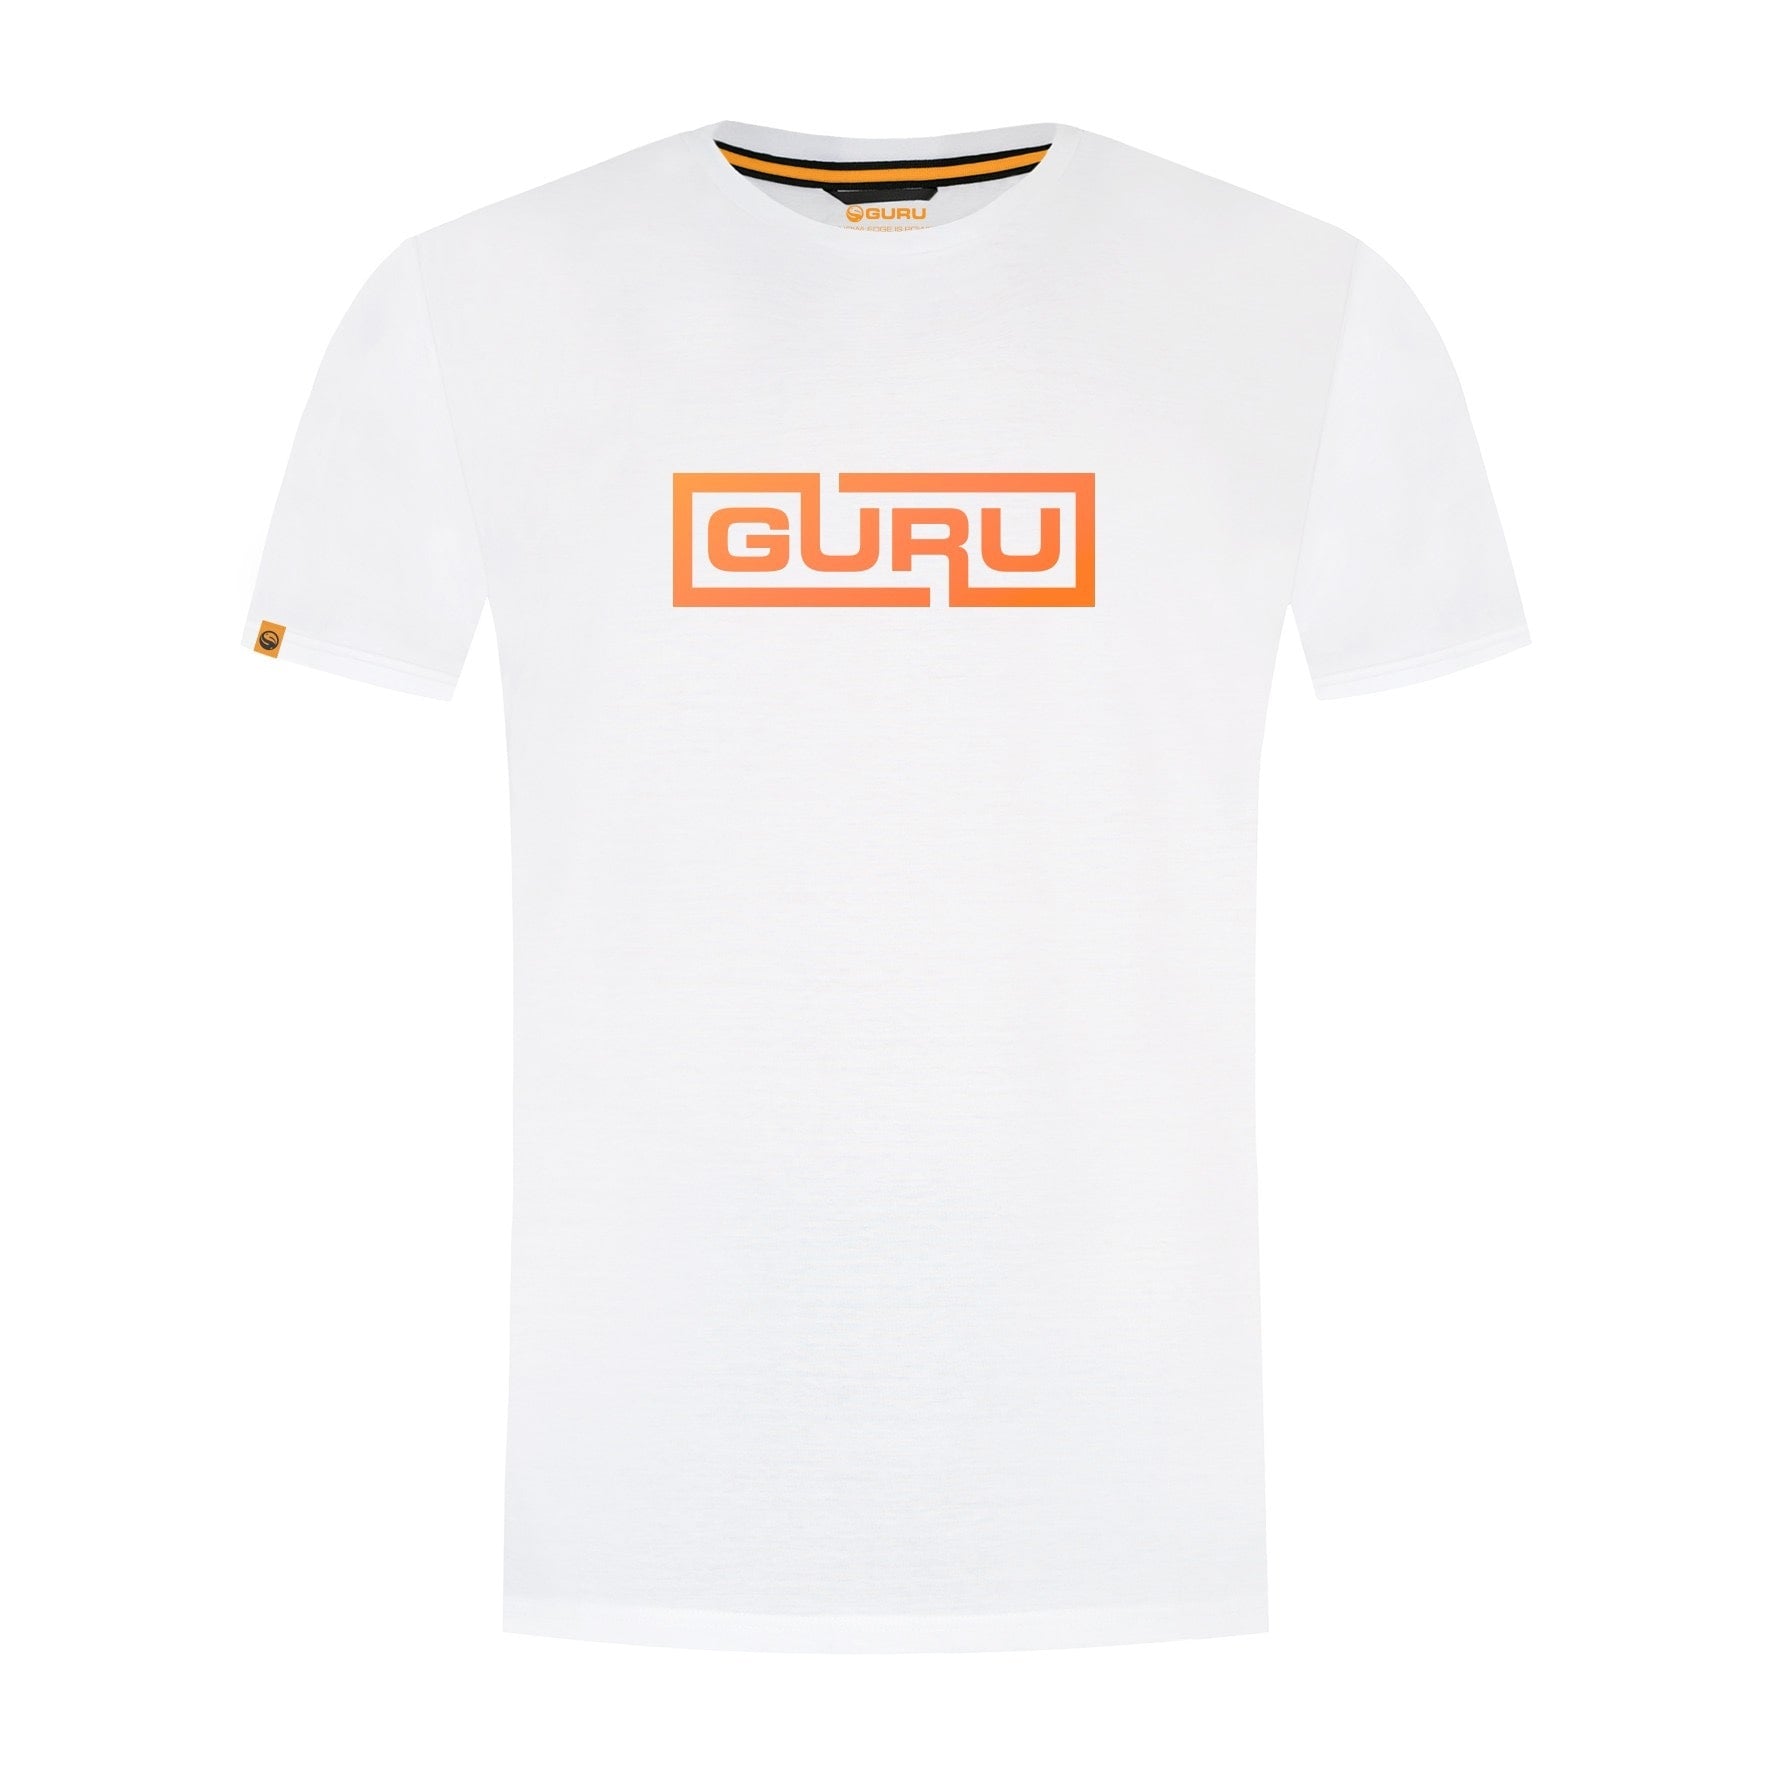 Guru gradient connect tee white - t-shirt